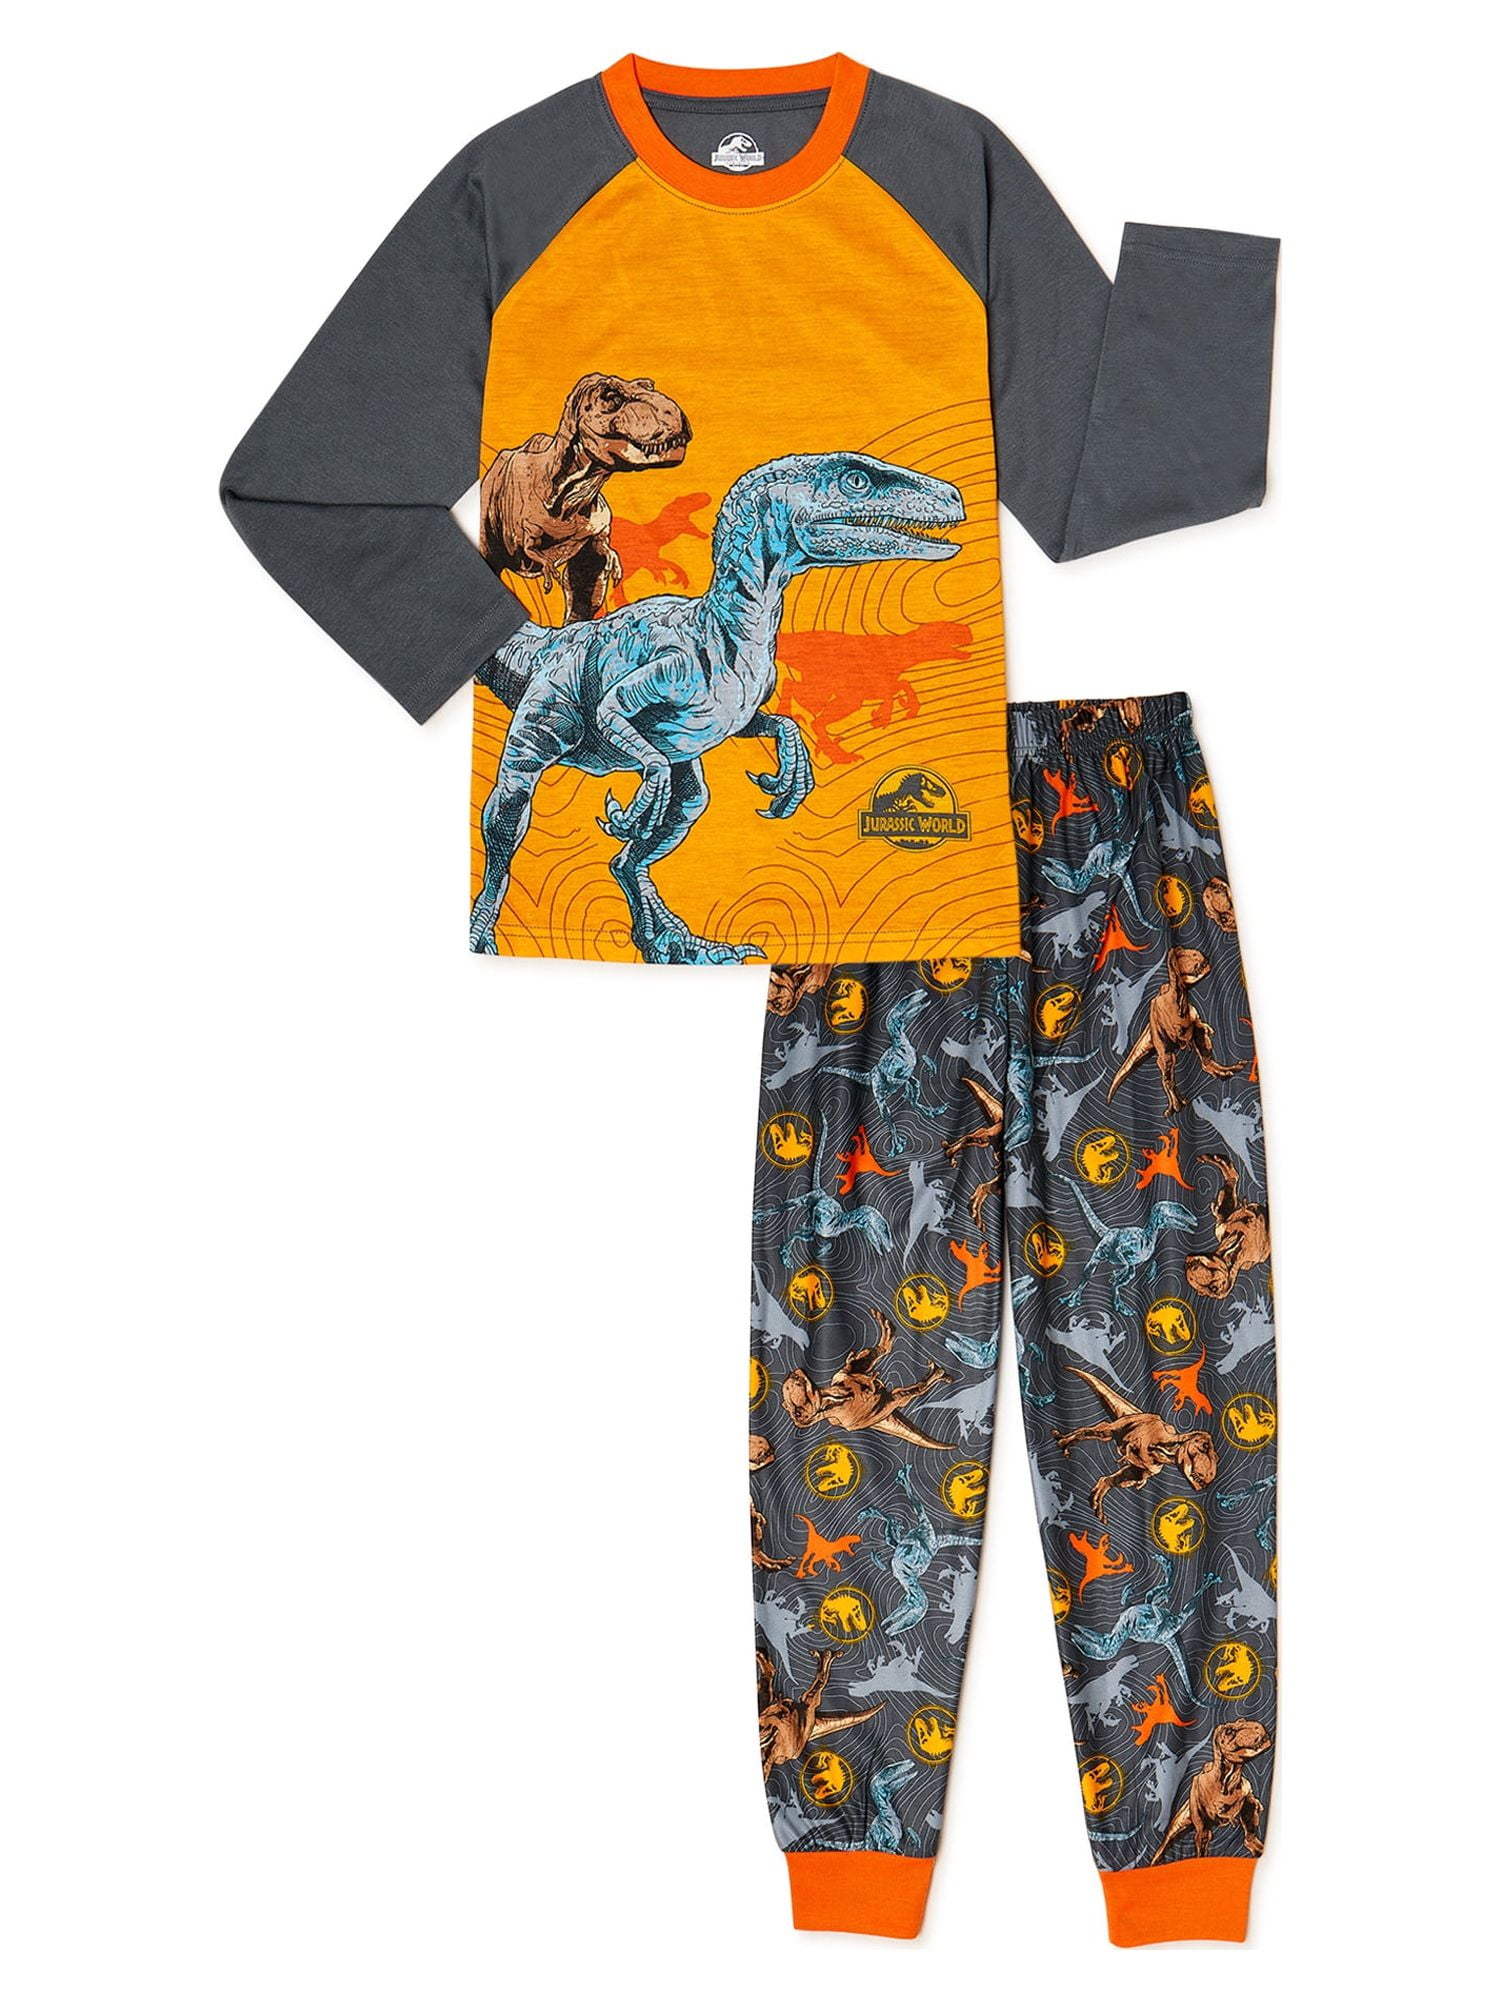 Jurassic Park Boys Long Sleeve Top and Pants, 2-Piece Pajamas Set ...